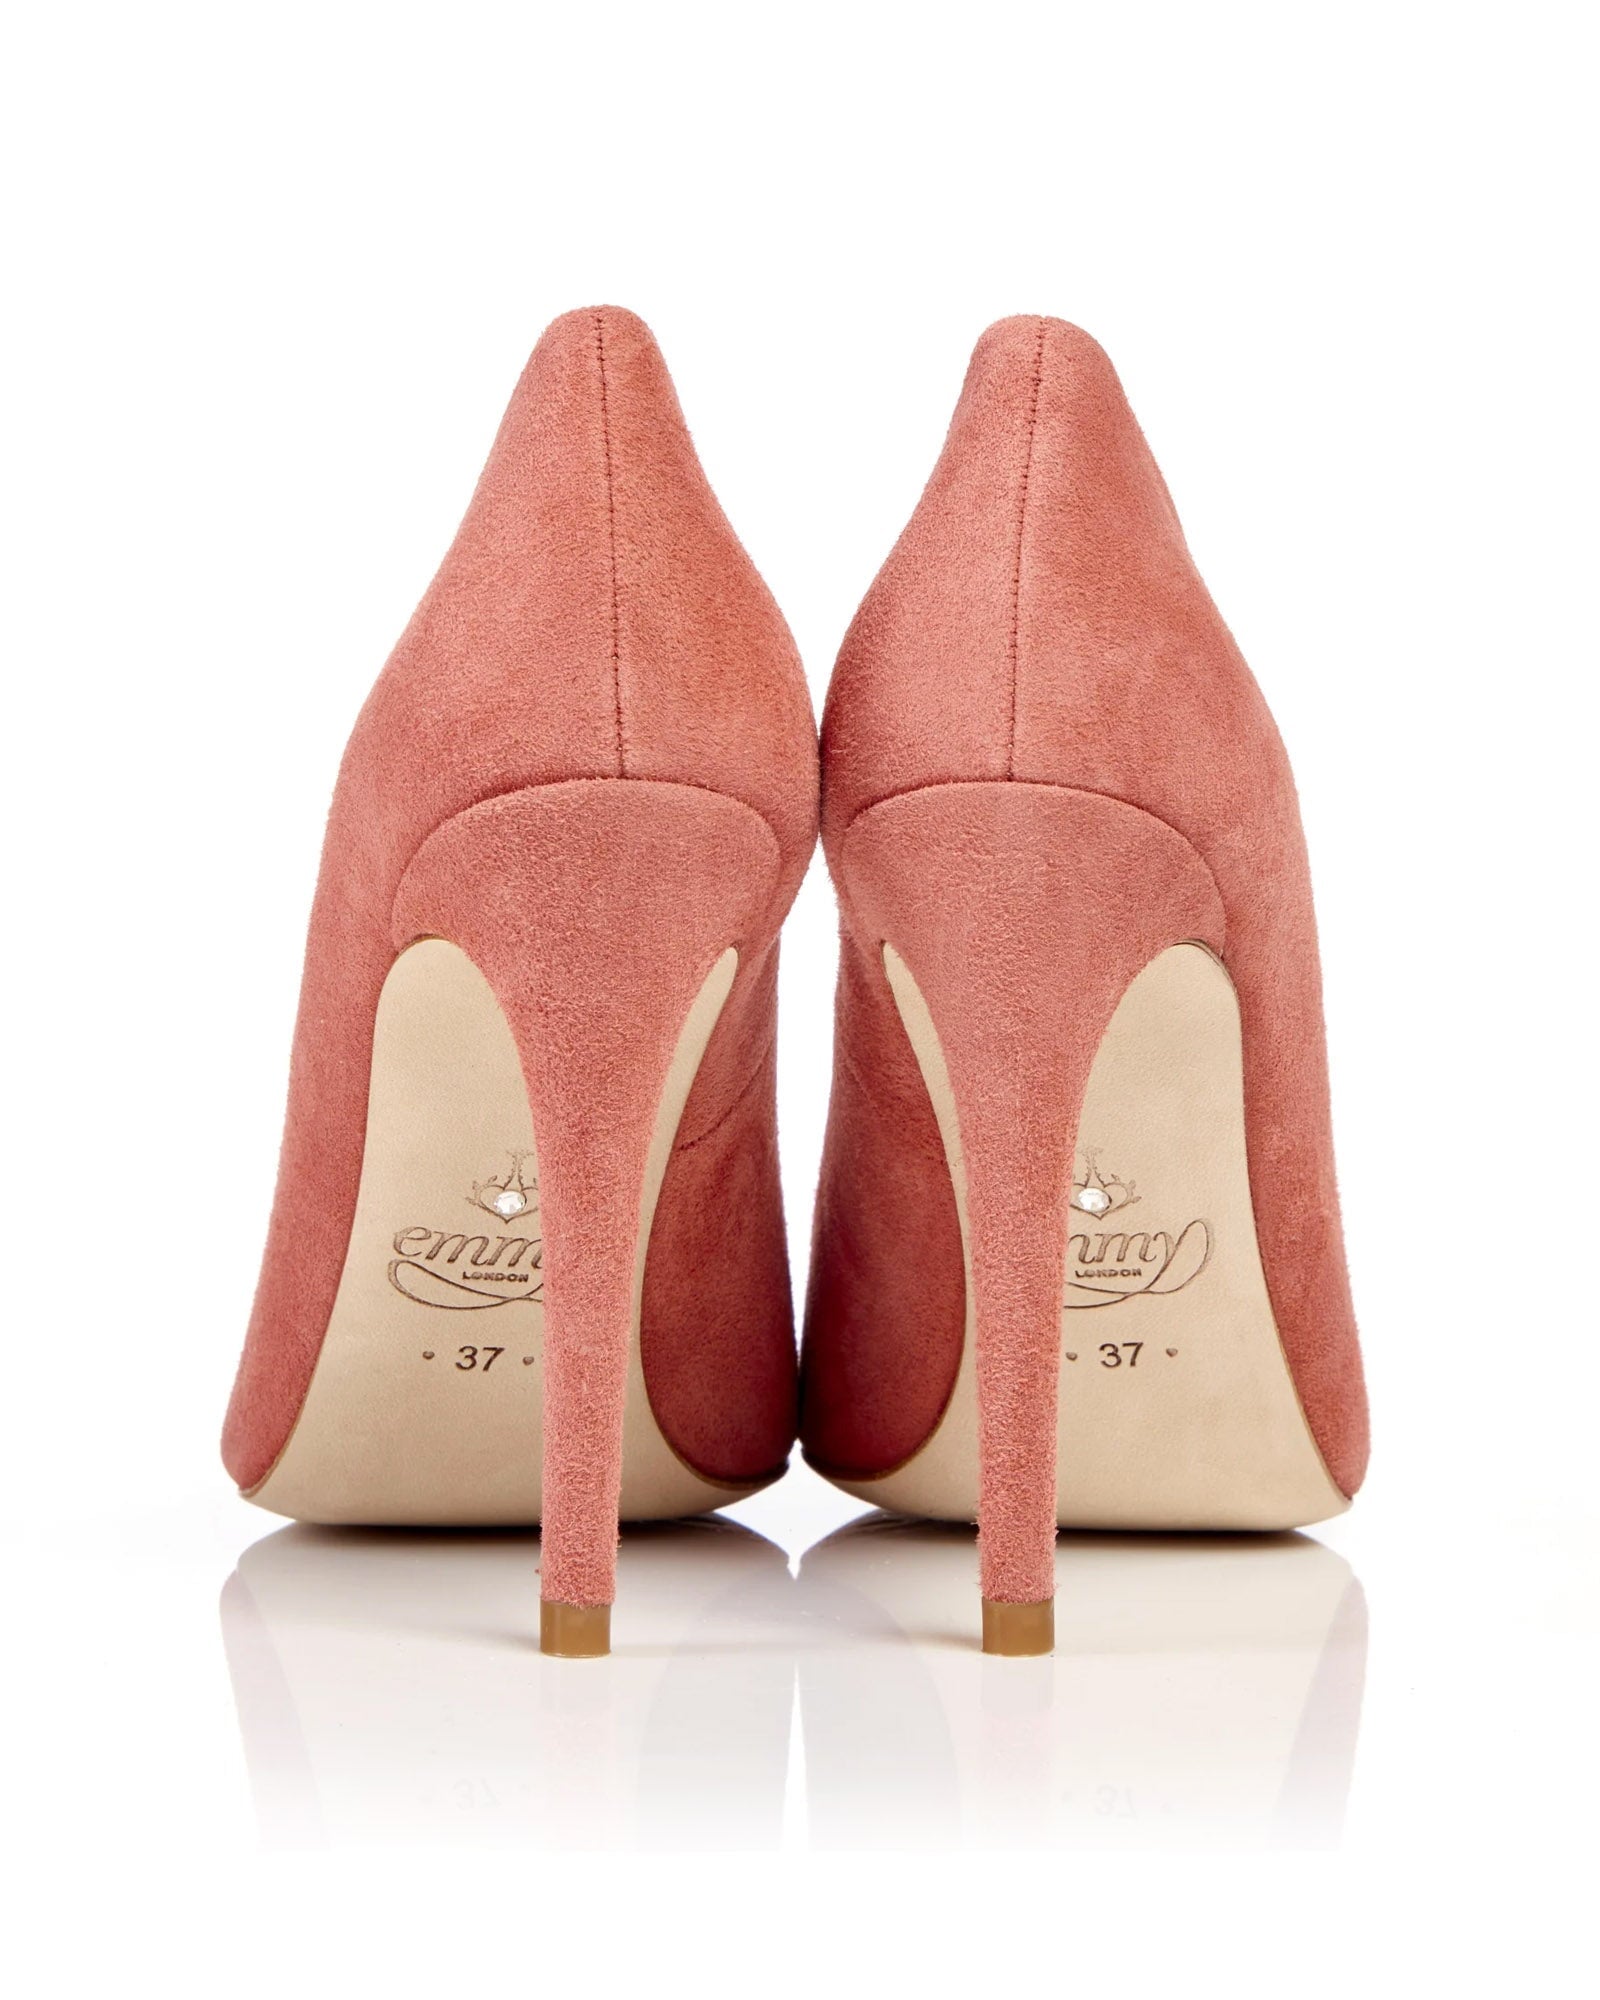 Rebecca Makeup Fashion Shoe Pink Pointed High Heel Court  image